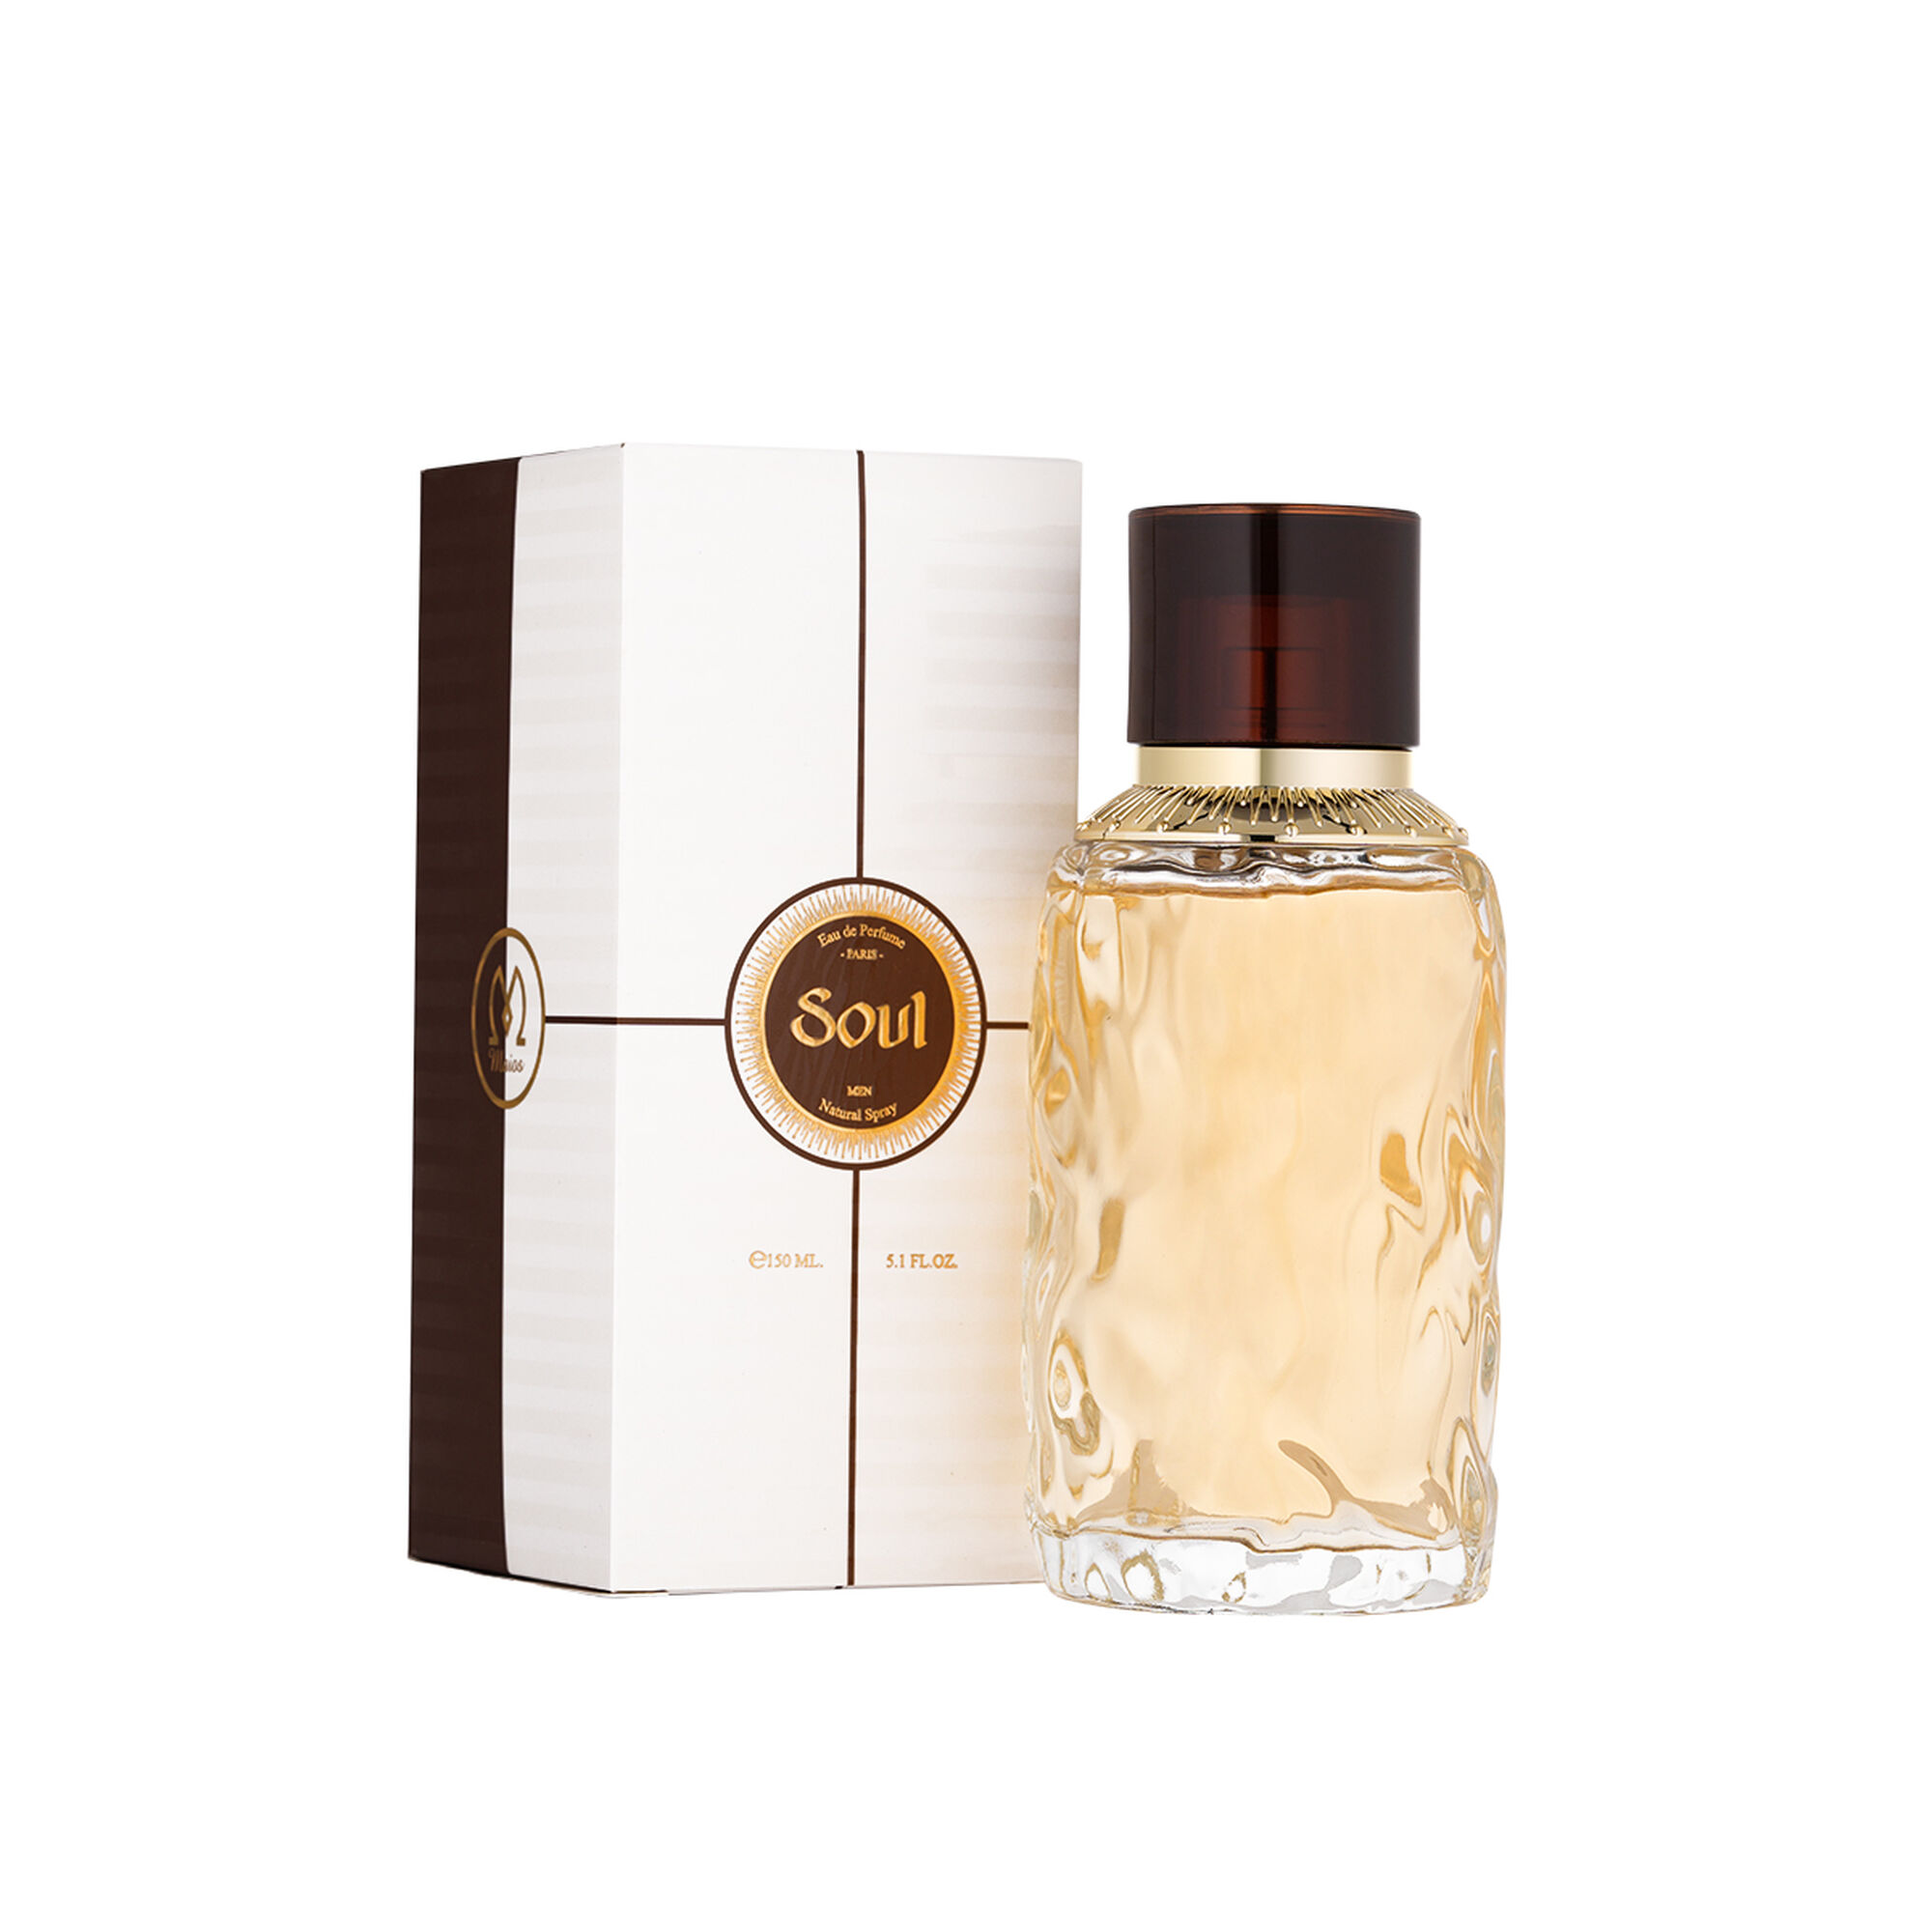 Soul Perfume by Maios 100ml 150 ml